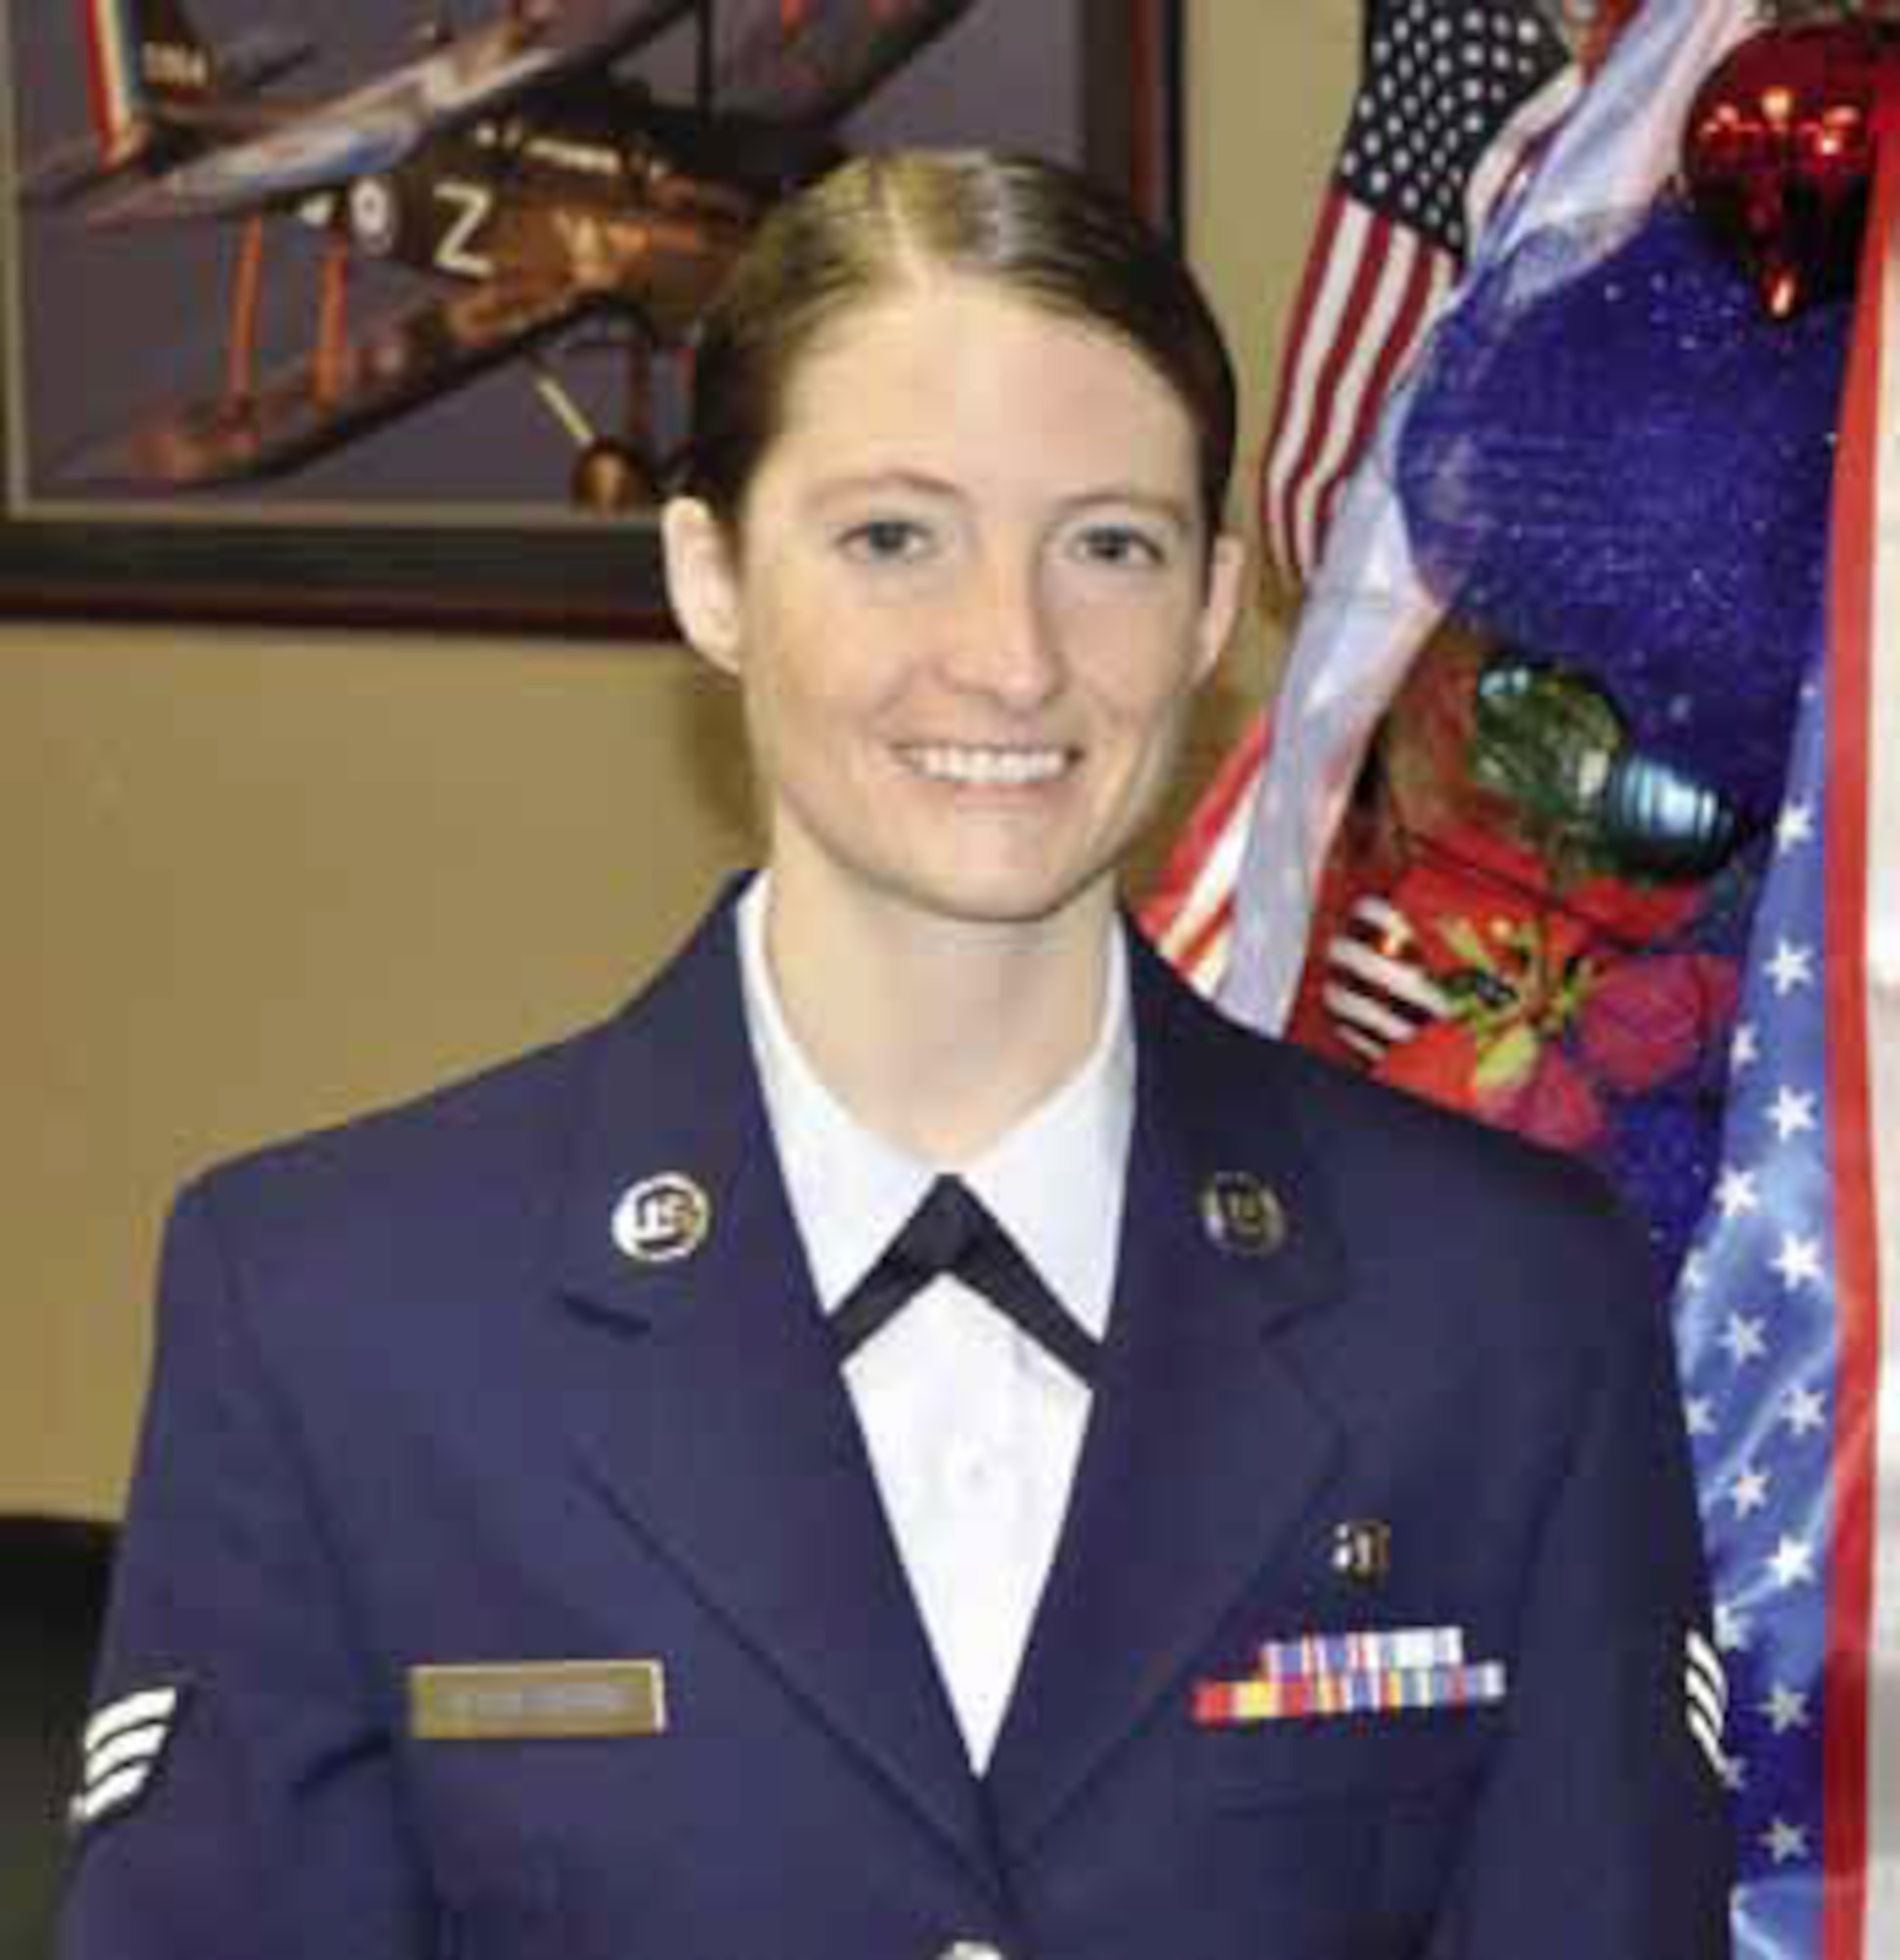 Senior Airman Holly Stevenson
452d Aerospace Medicine Squadron
Airman of the quarter 
First Quarter FY 2013